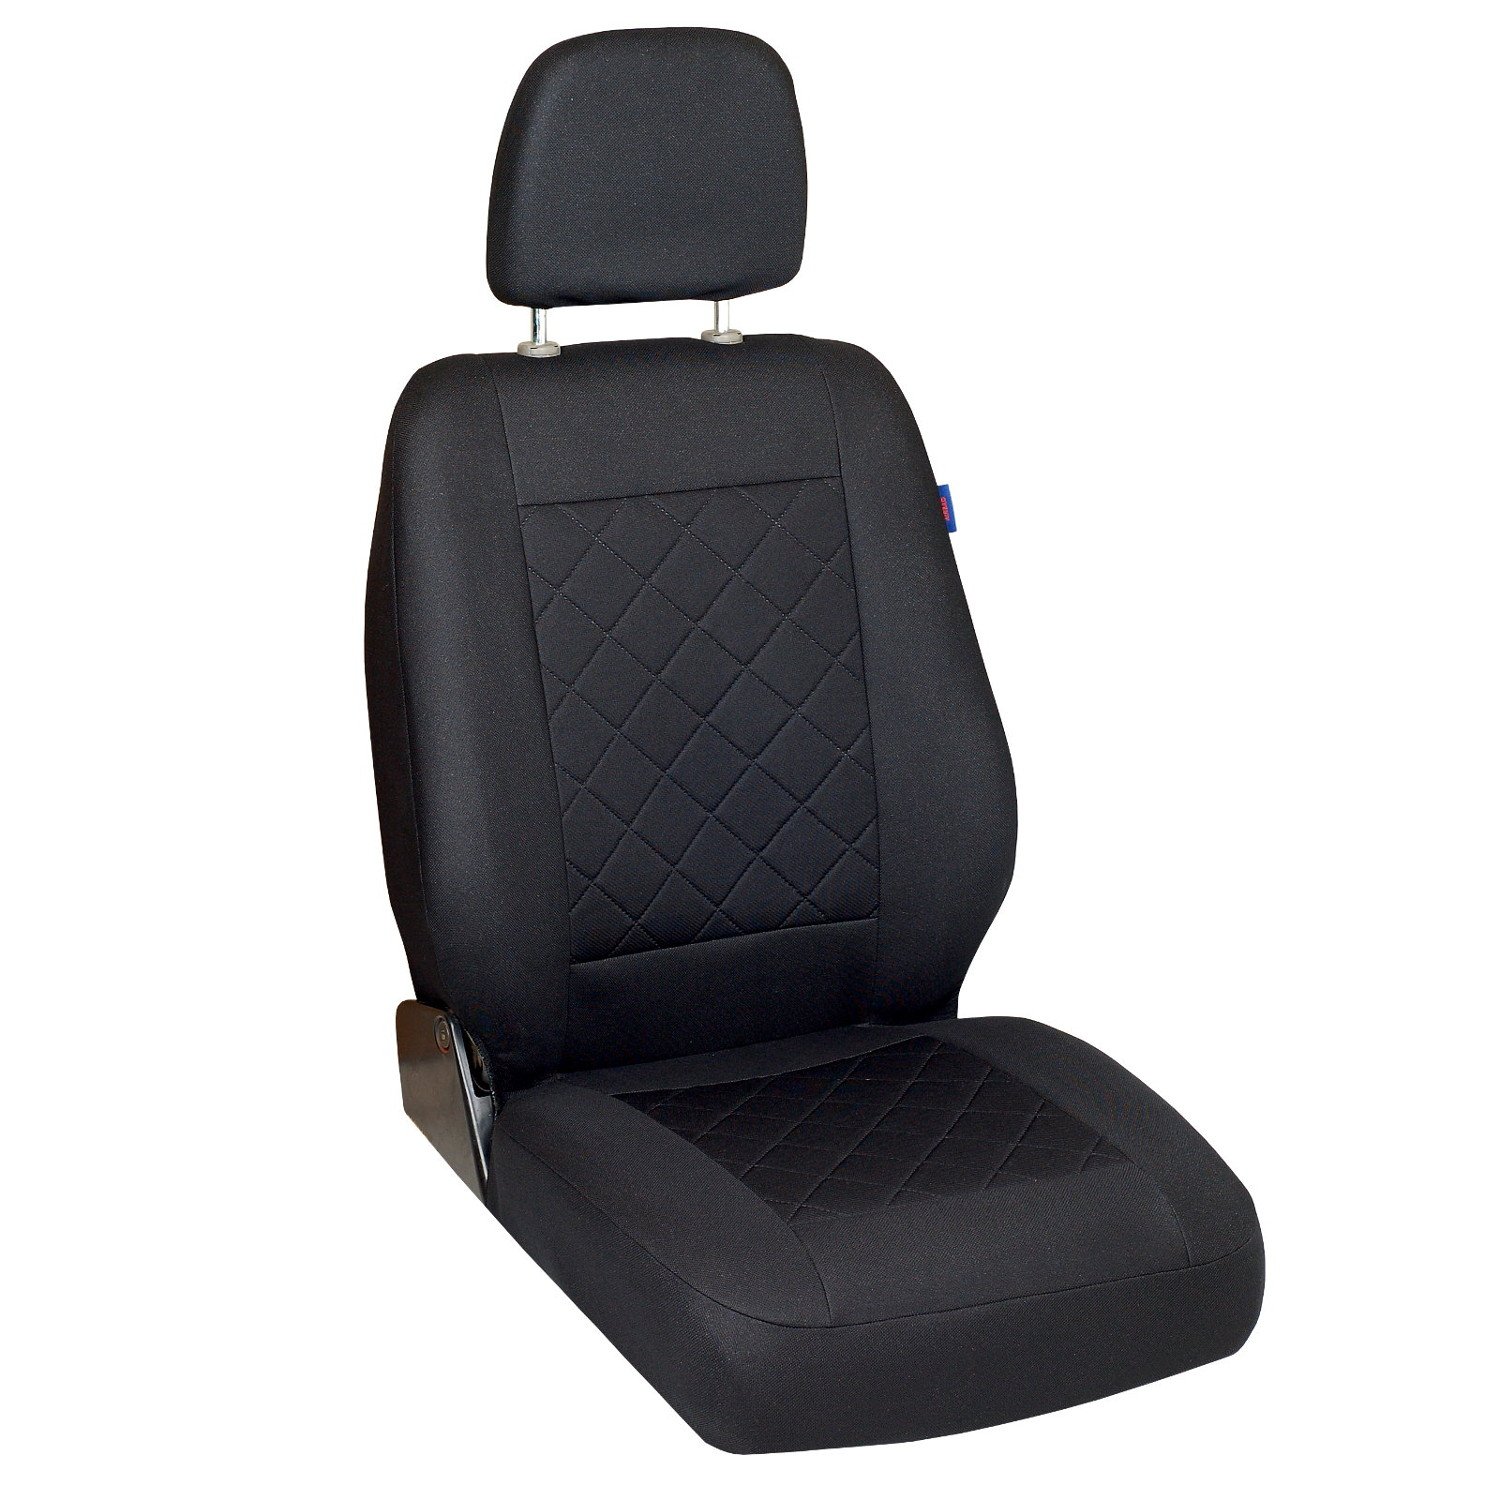 Transit Sitzbezug - Fahrersitz - Farbe Premium Schwarz gepresstes Karomuster